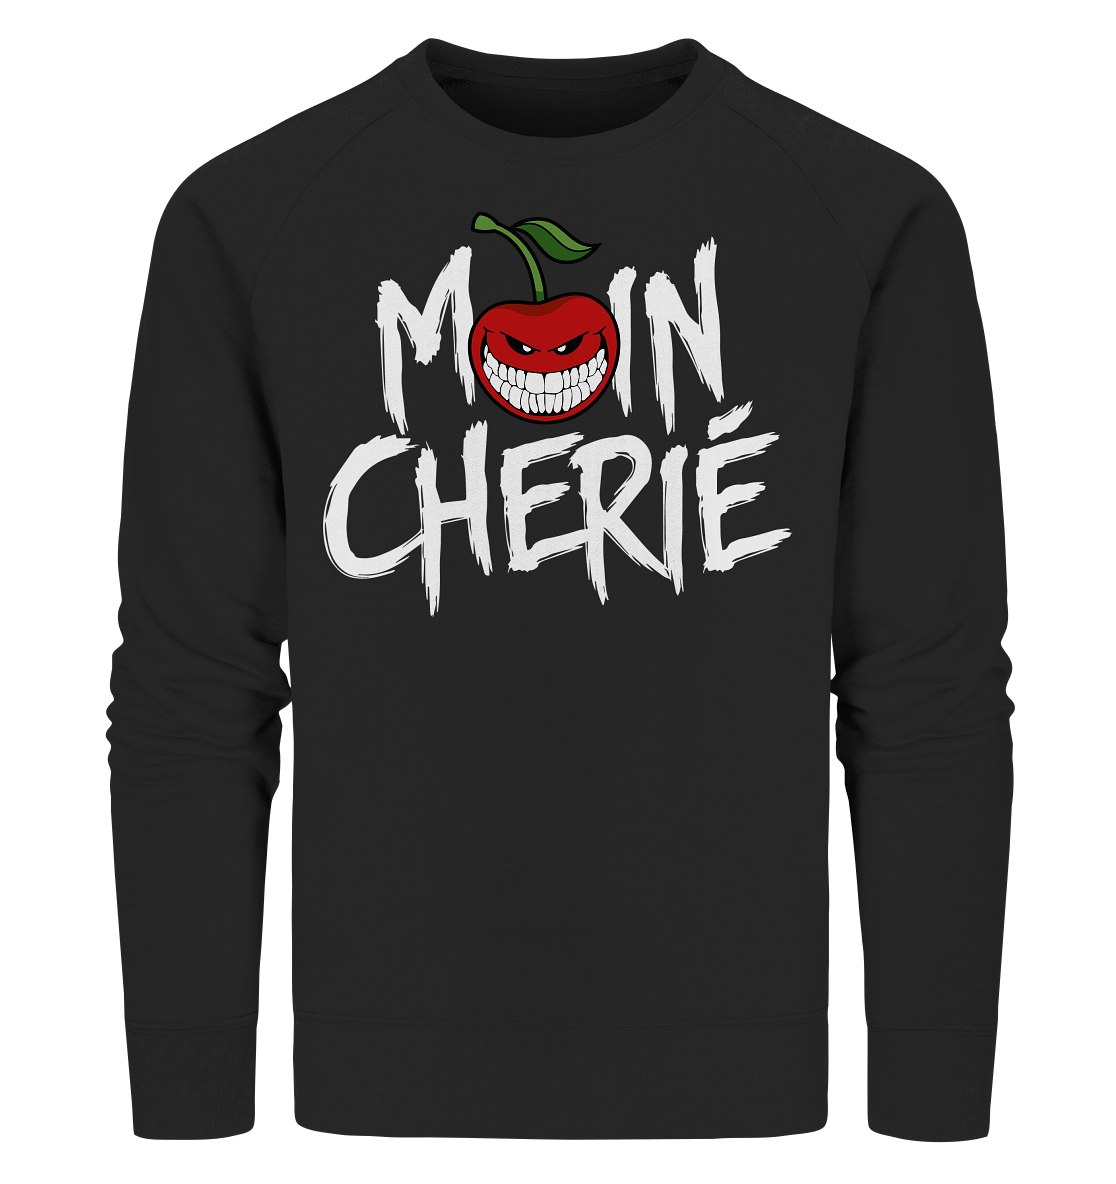 Moin Cherié - Logo Weiß - Organic Sweatshirt